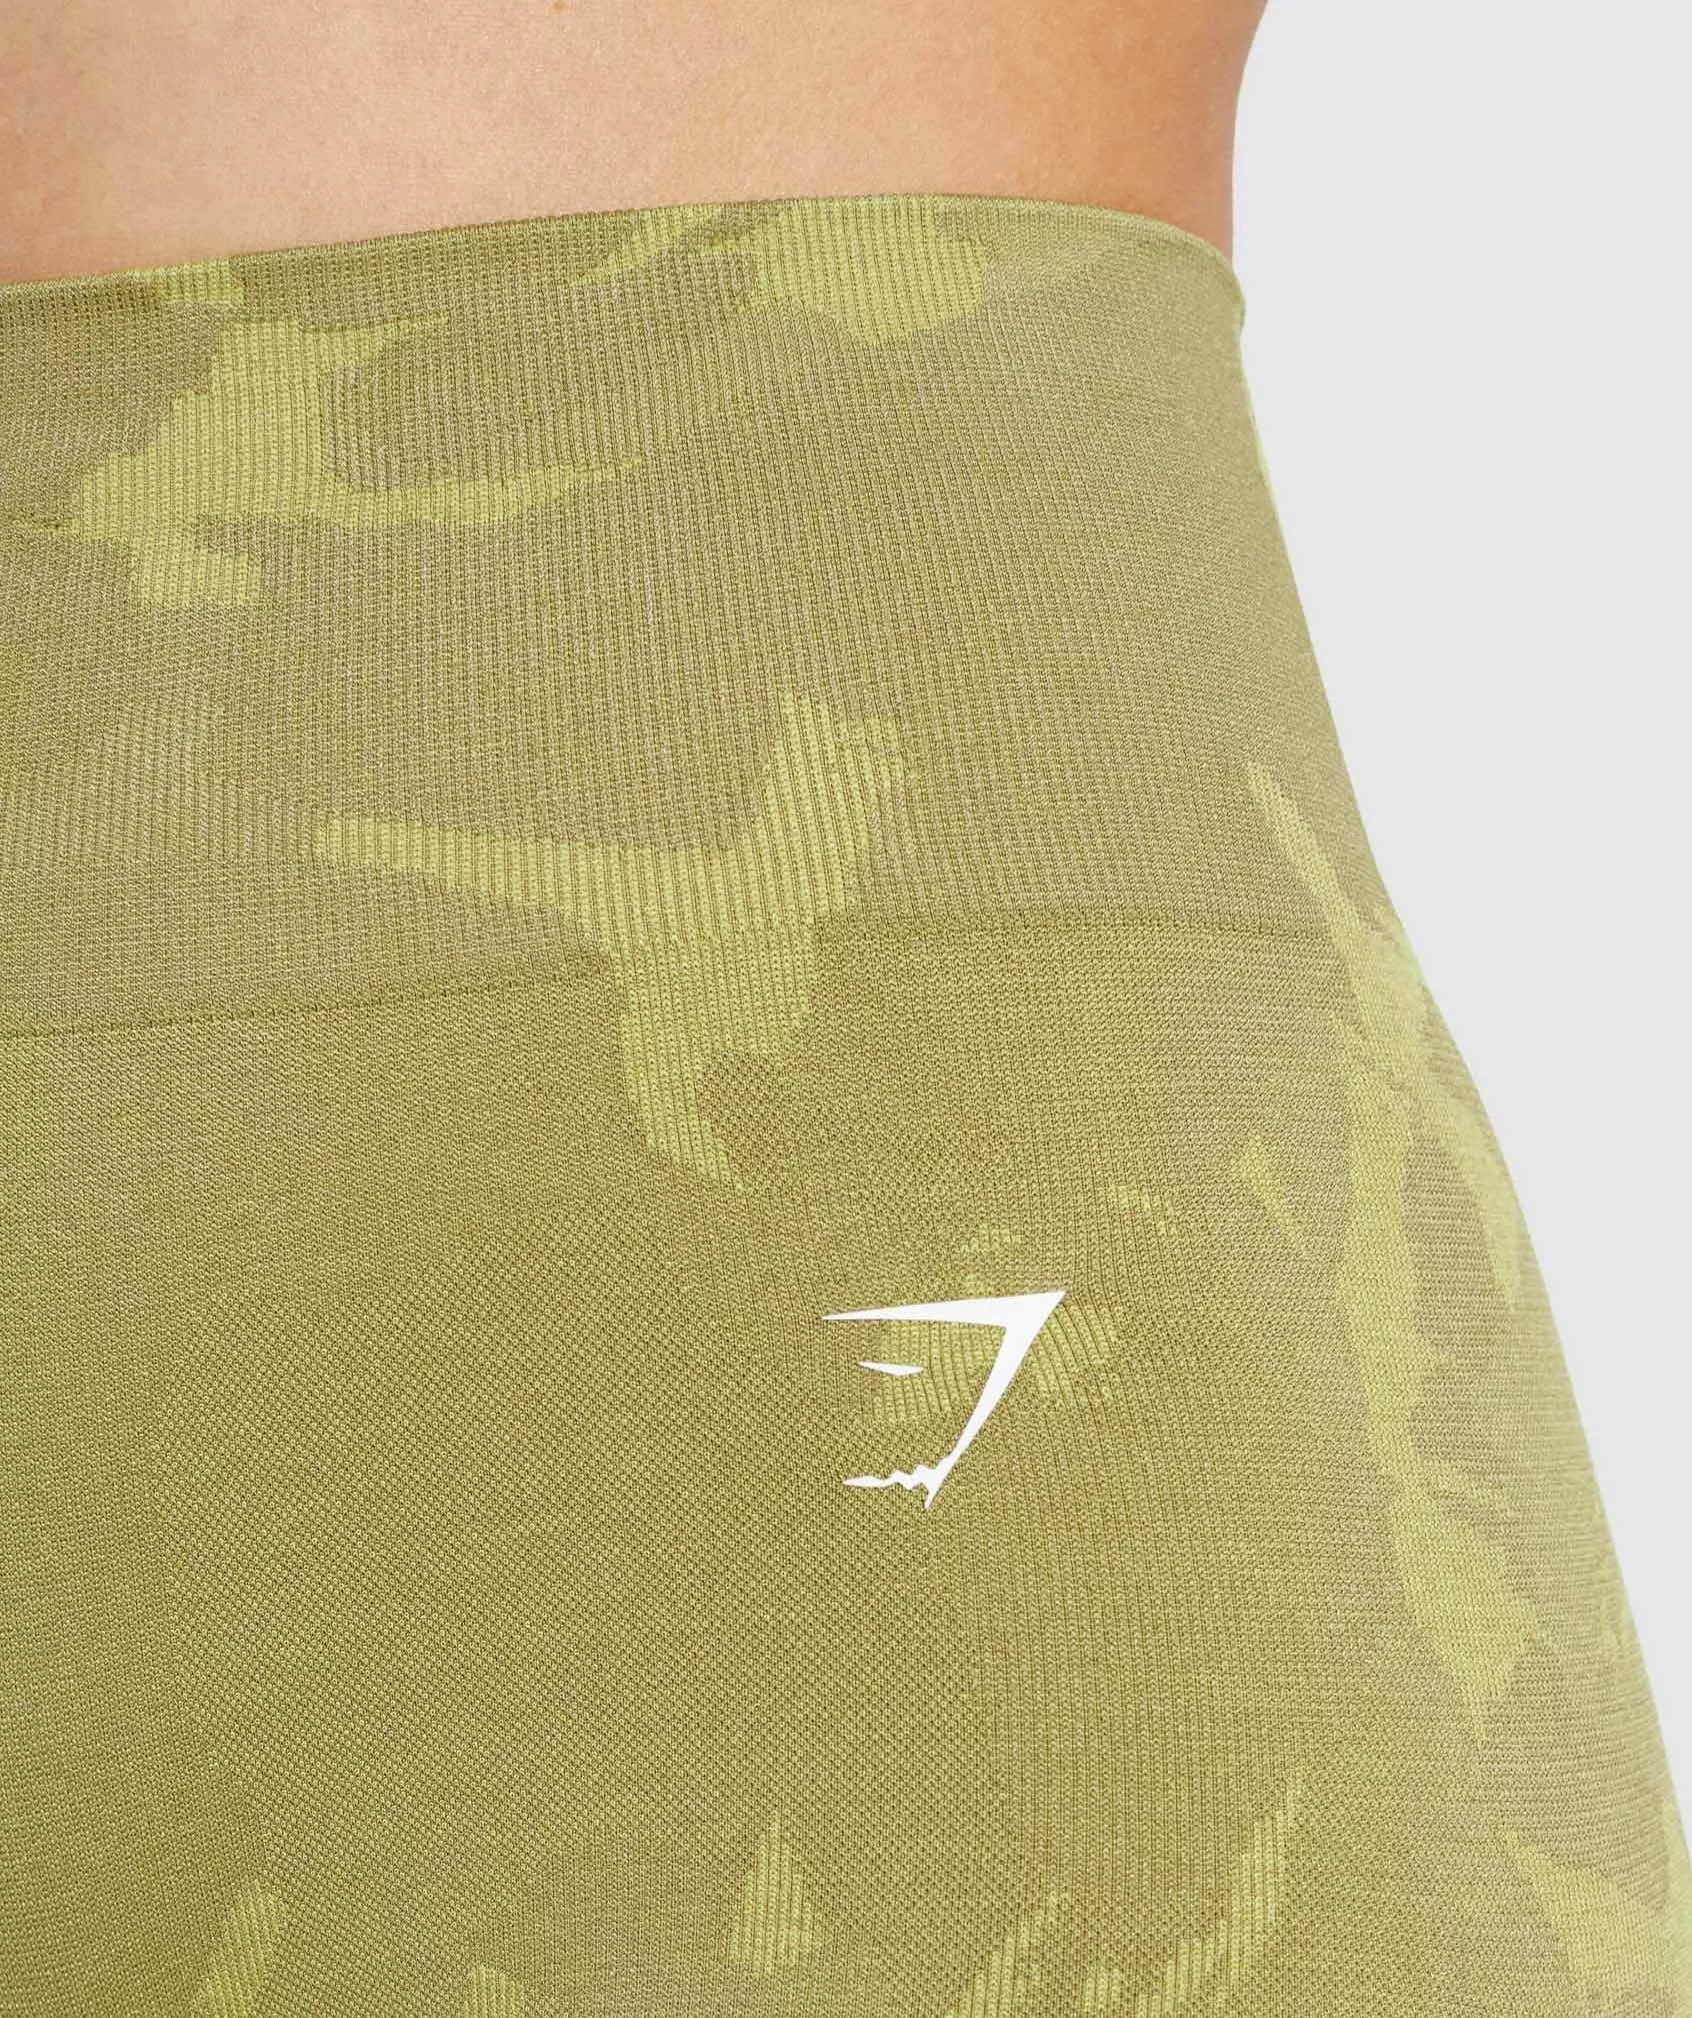 Lot of 2 Gymshark Adapt Camo Seamless Shorts Black & Green Size